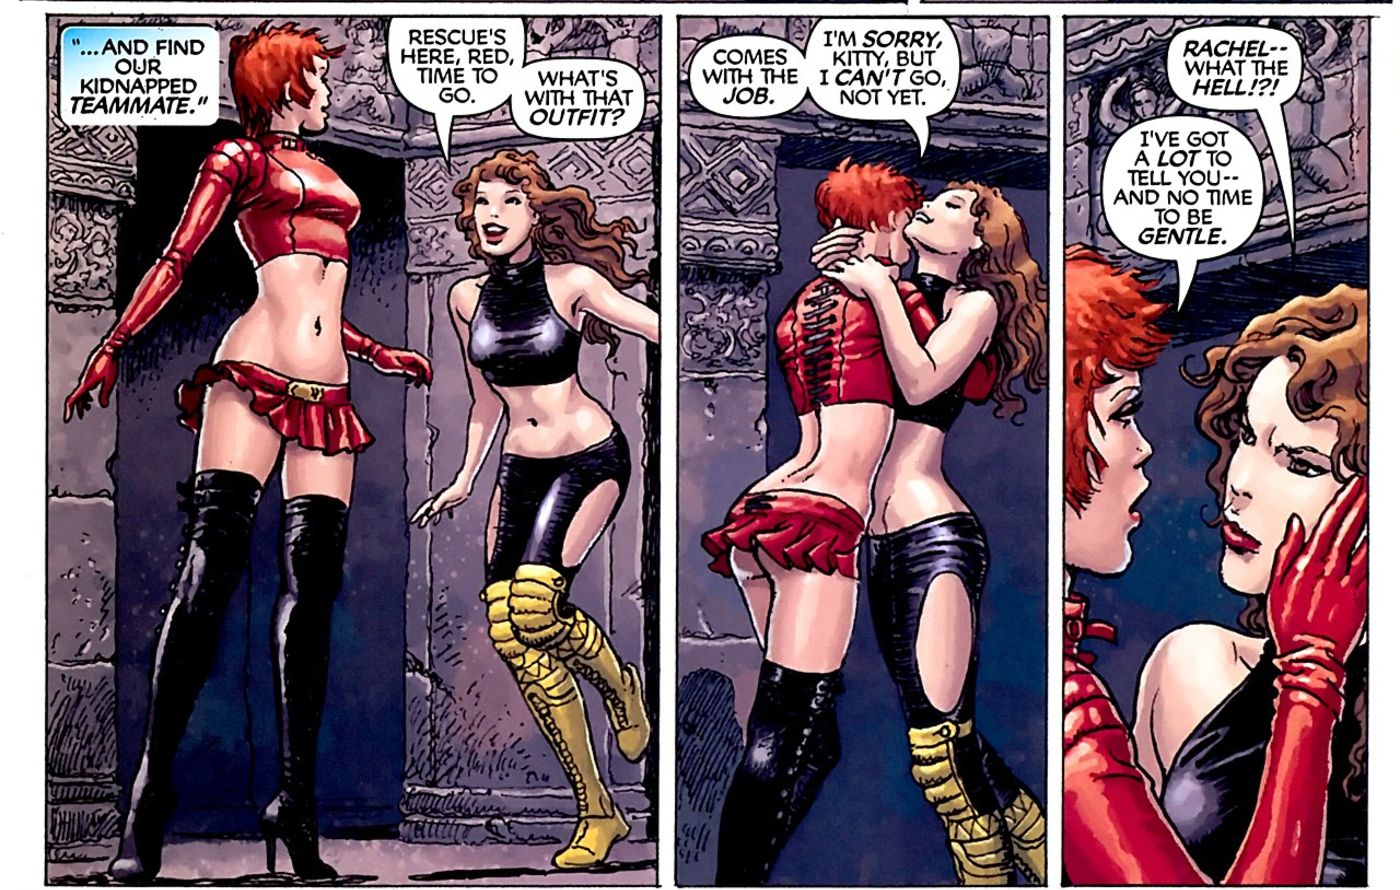 X-Men X-Women Rachel Kitty